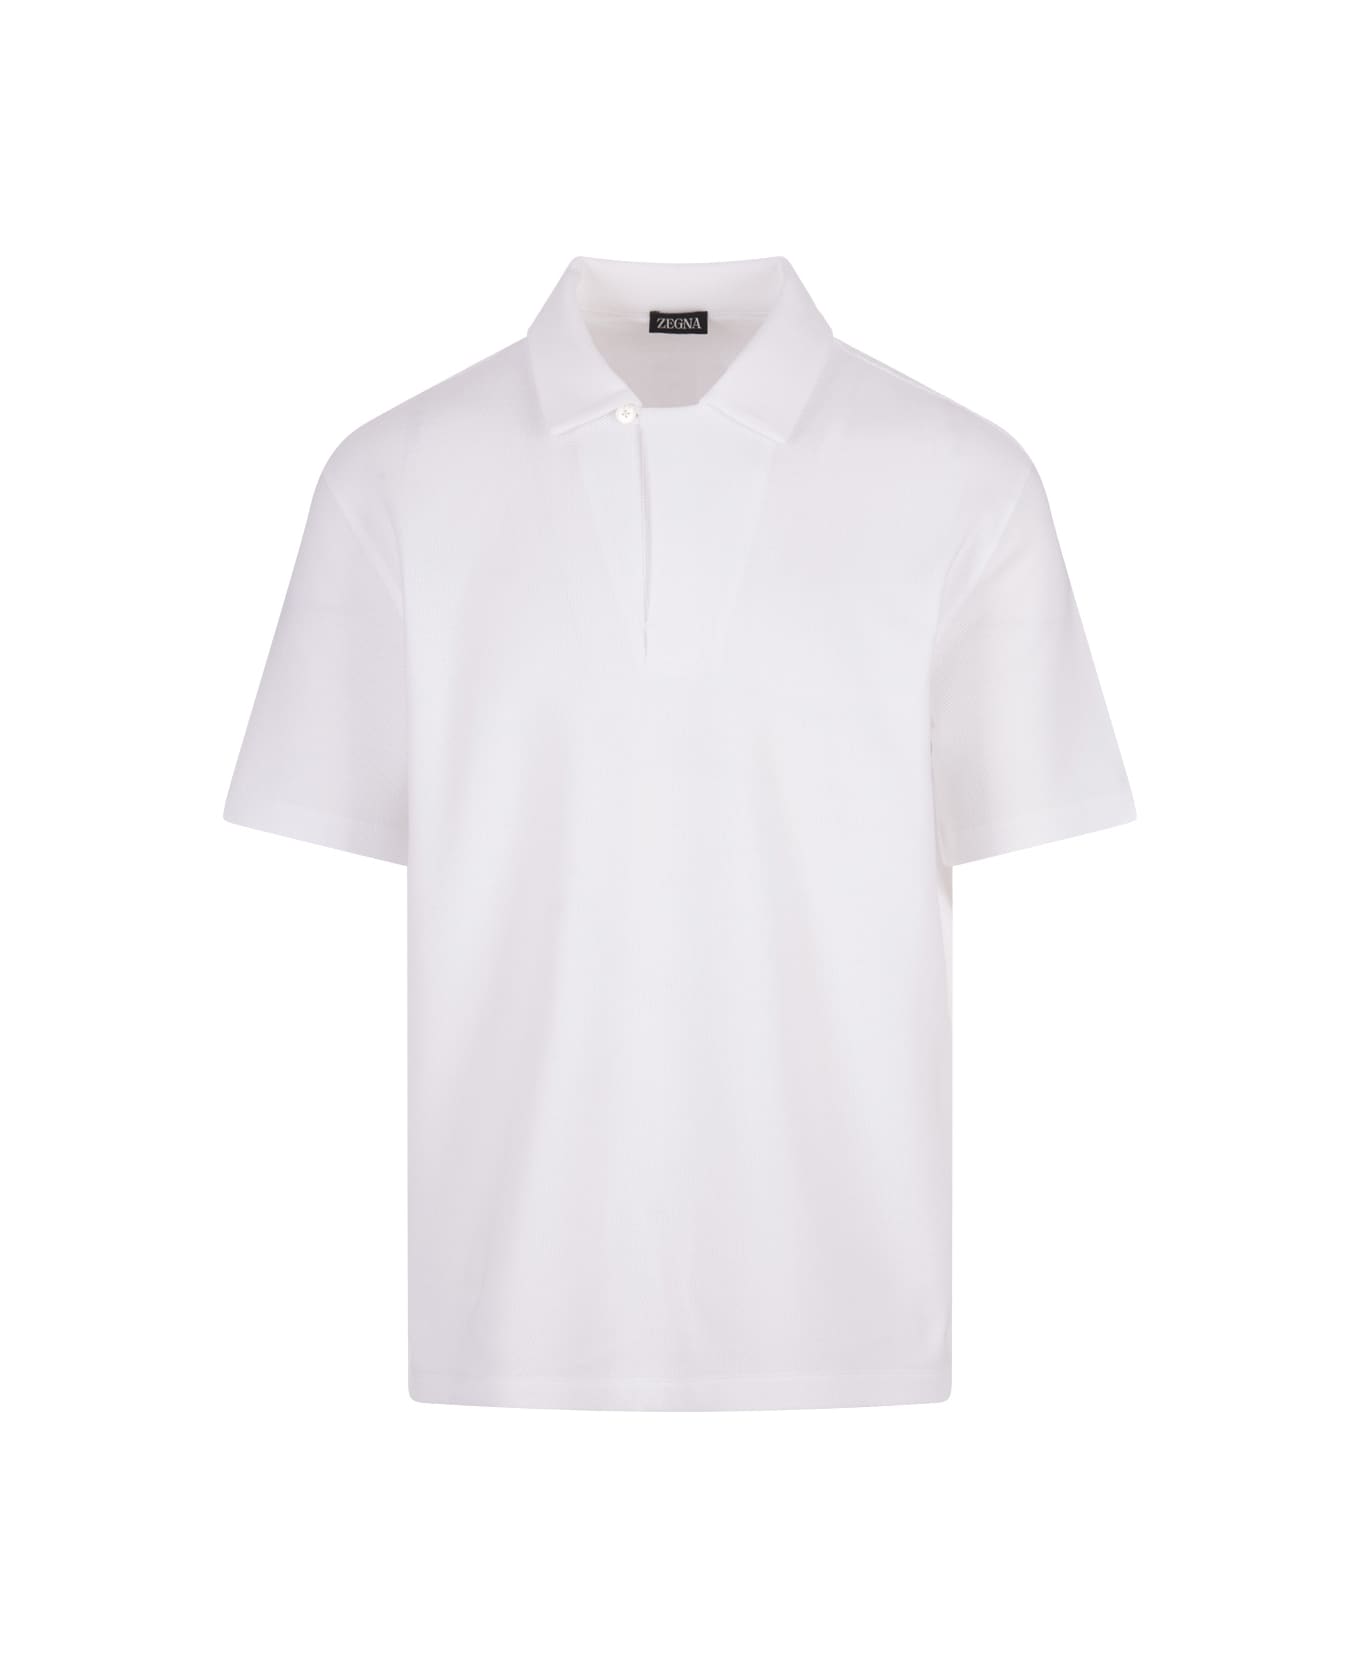 Zegna White Honeycomb Cotton Polo Shirt - White